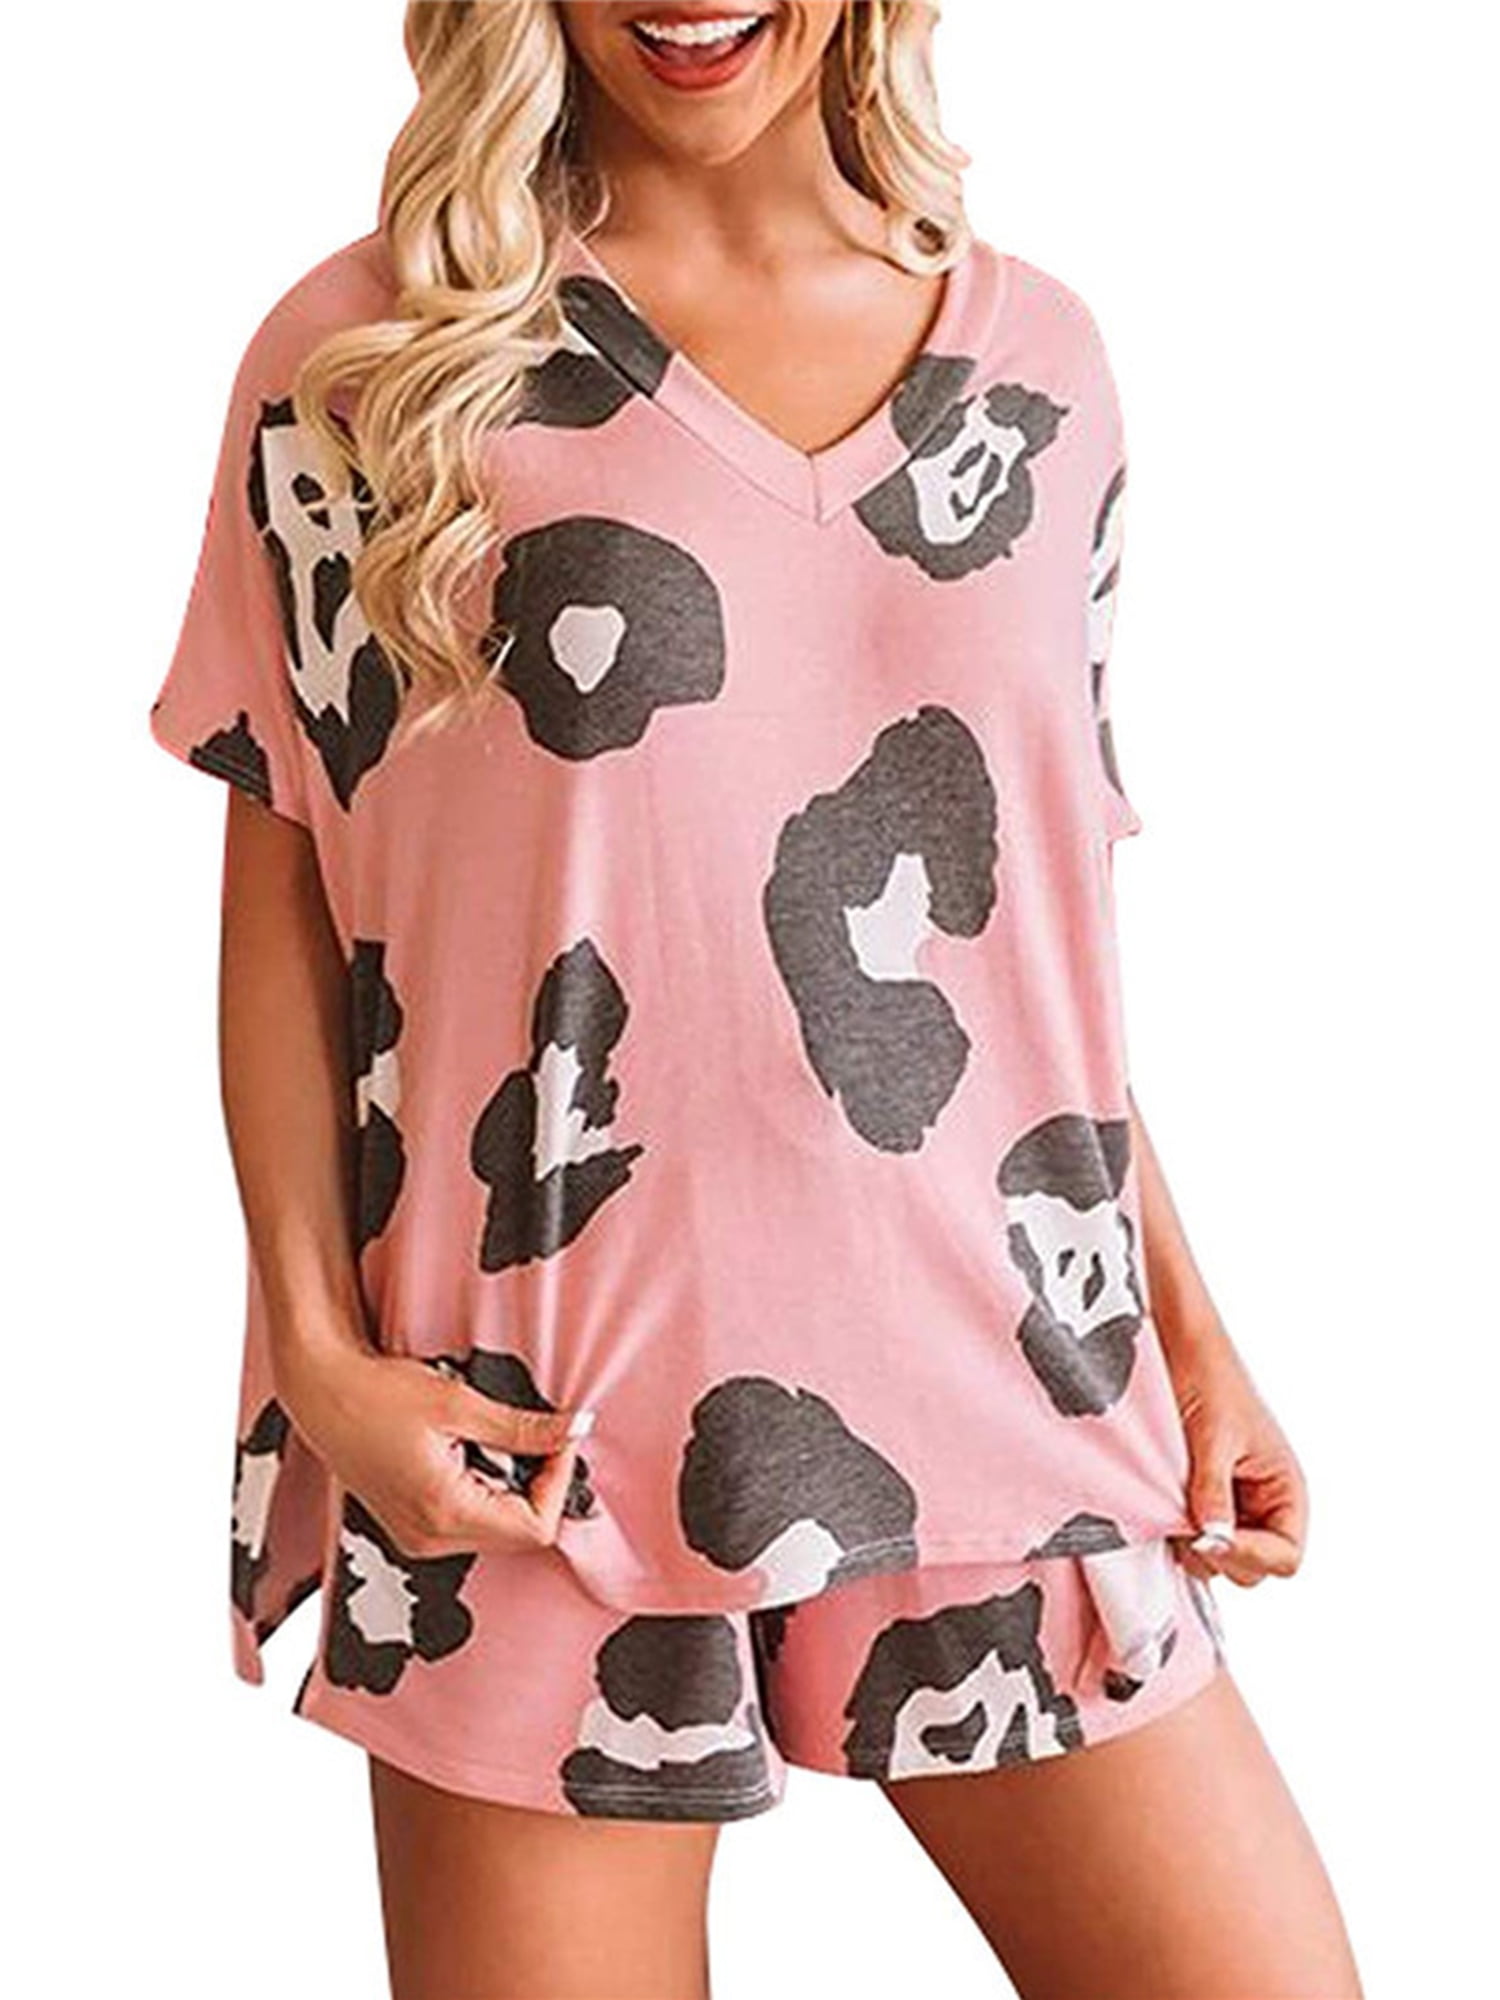 Women Two Piece Summer Tracksuits Cute Panda Printed Shirt Top and Shorts Set